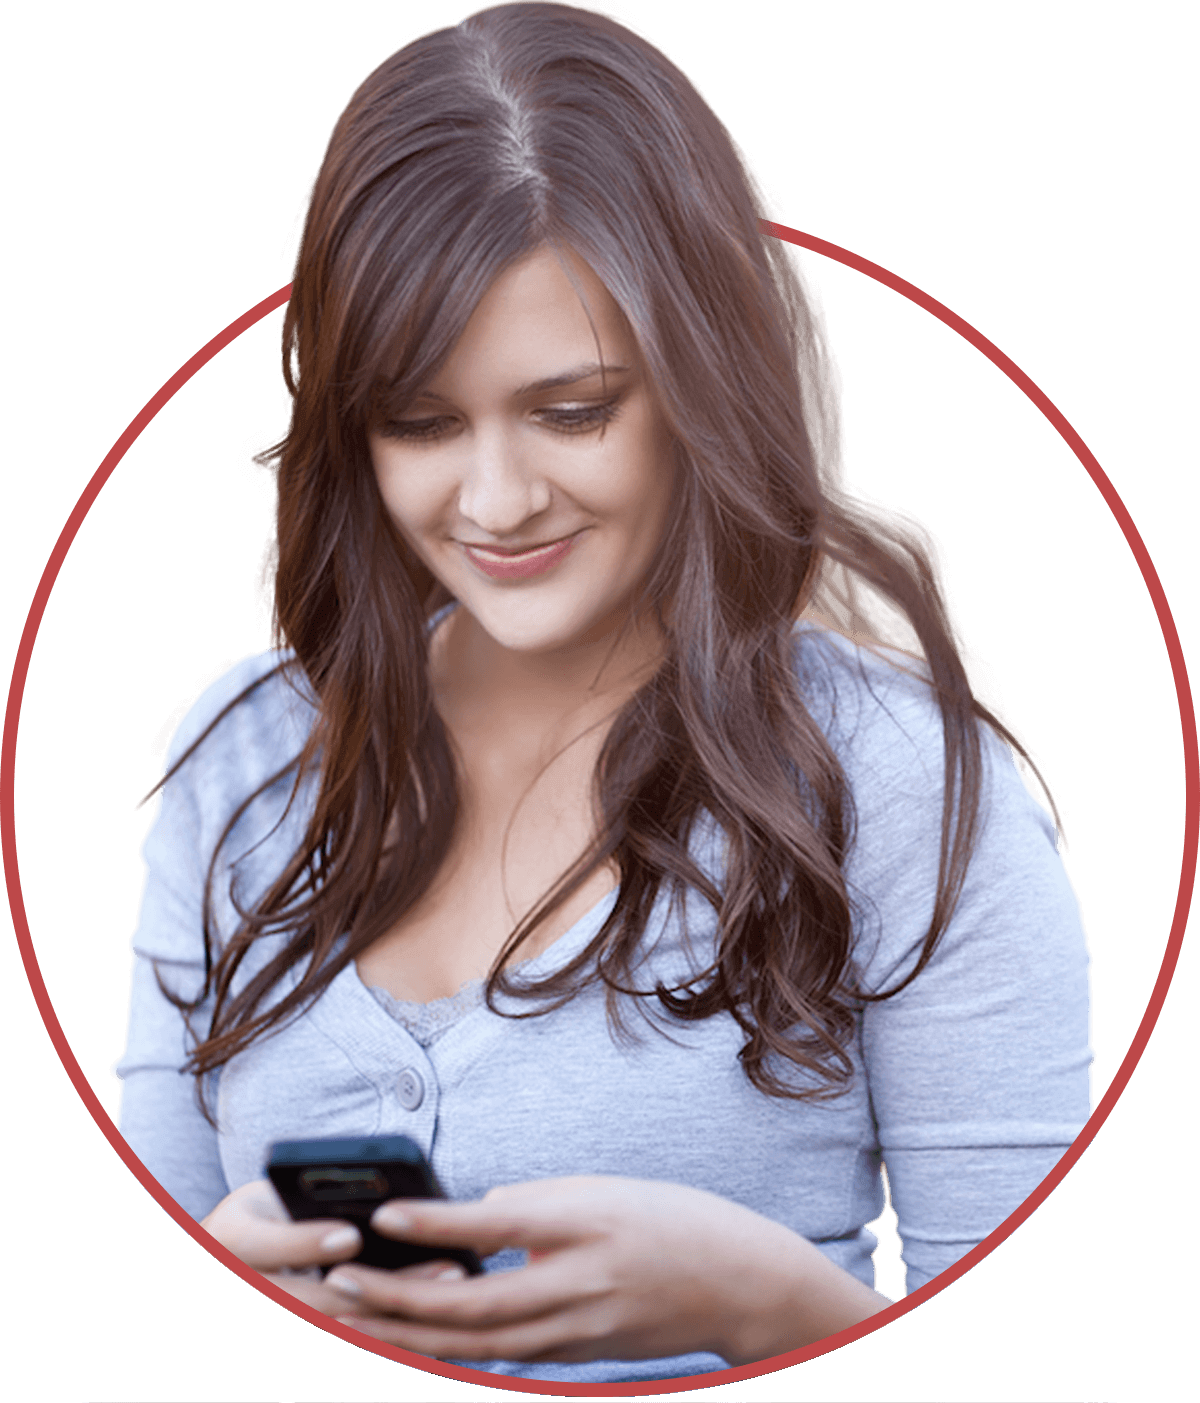 Mobile dating apps NZ skout online dating beoordelingen